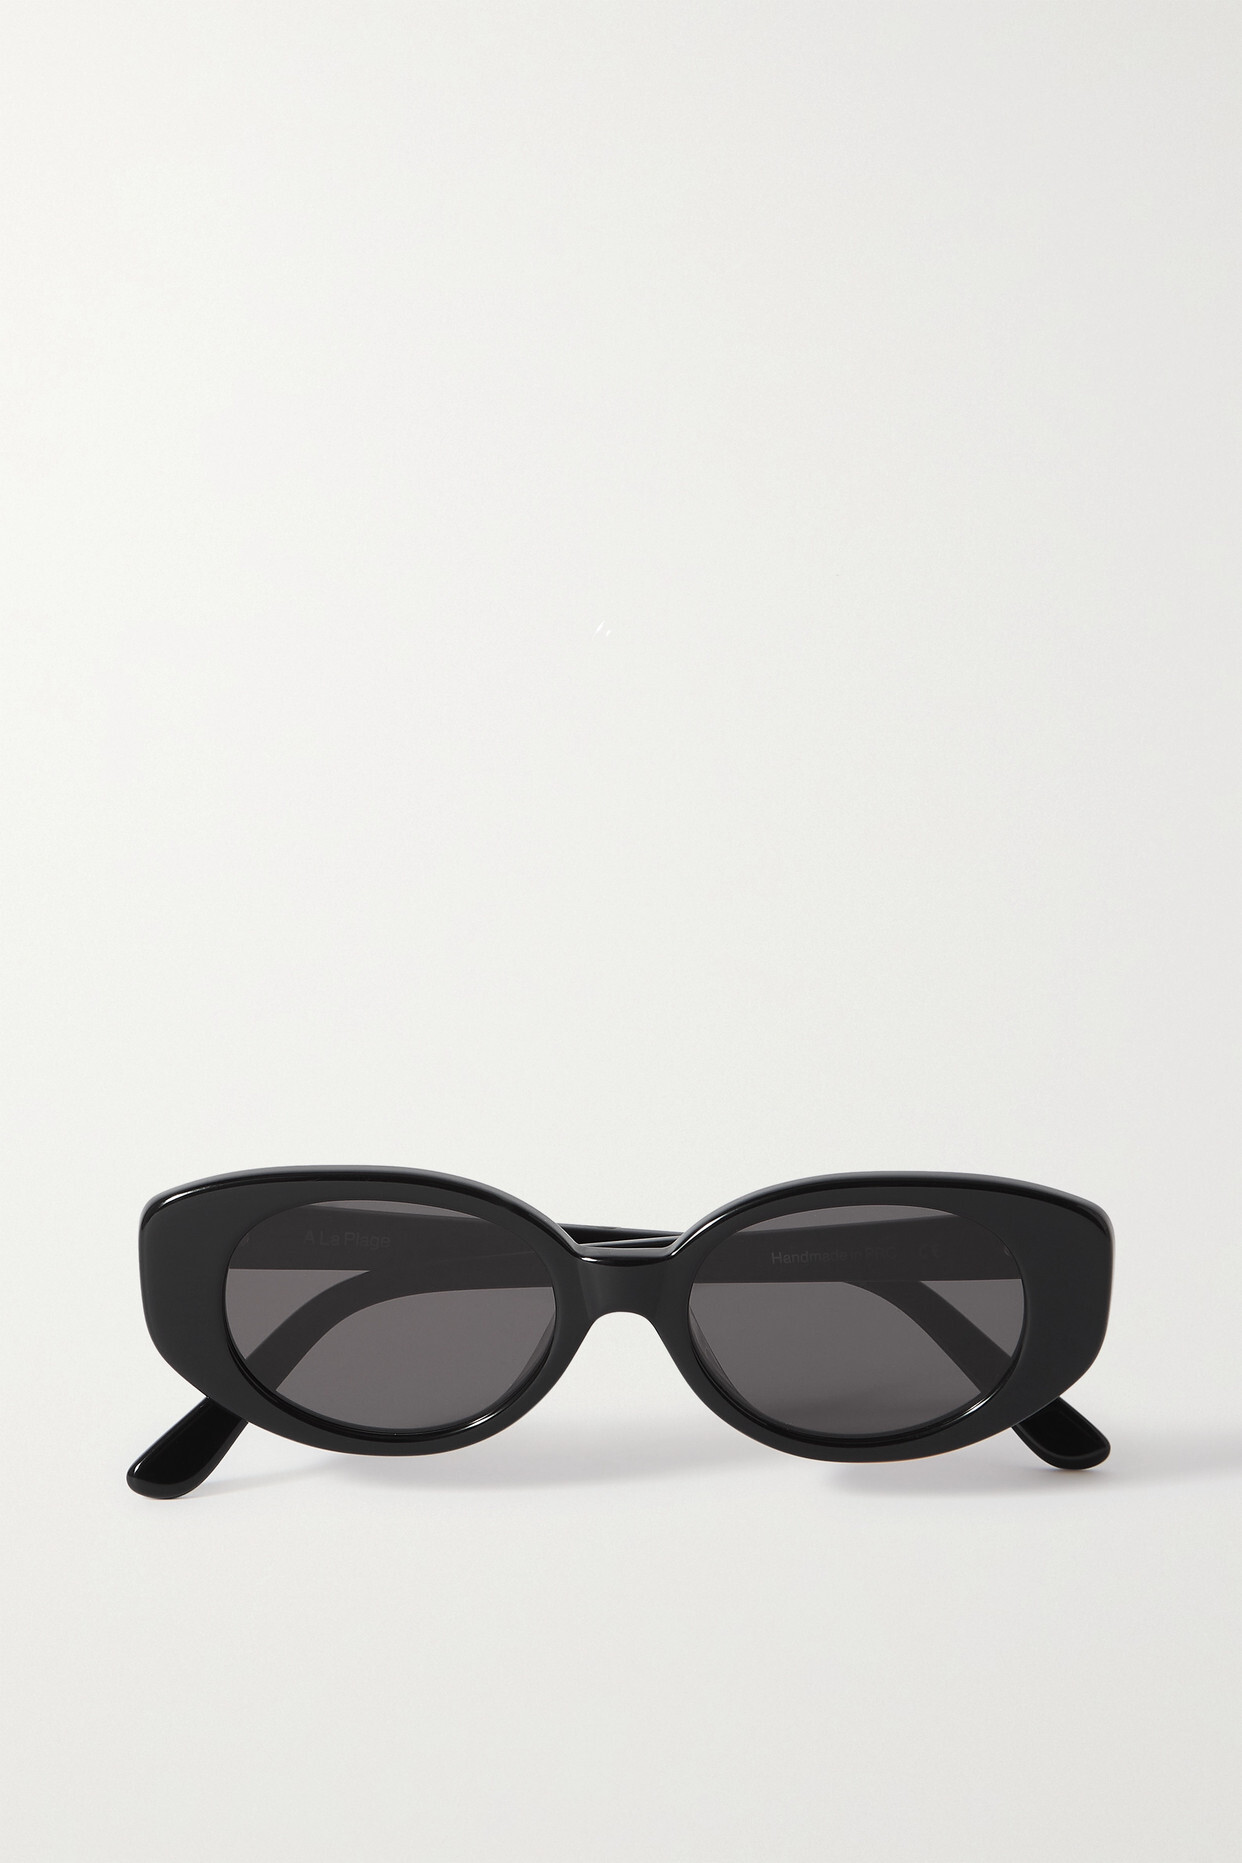 Velvet Canyon - + Net Sustain A La Plage Cat-eye Acetate Sunglasses - Black